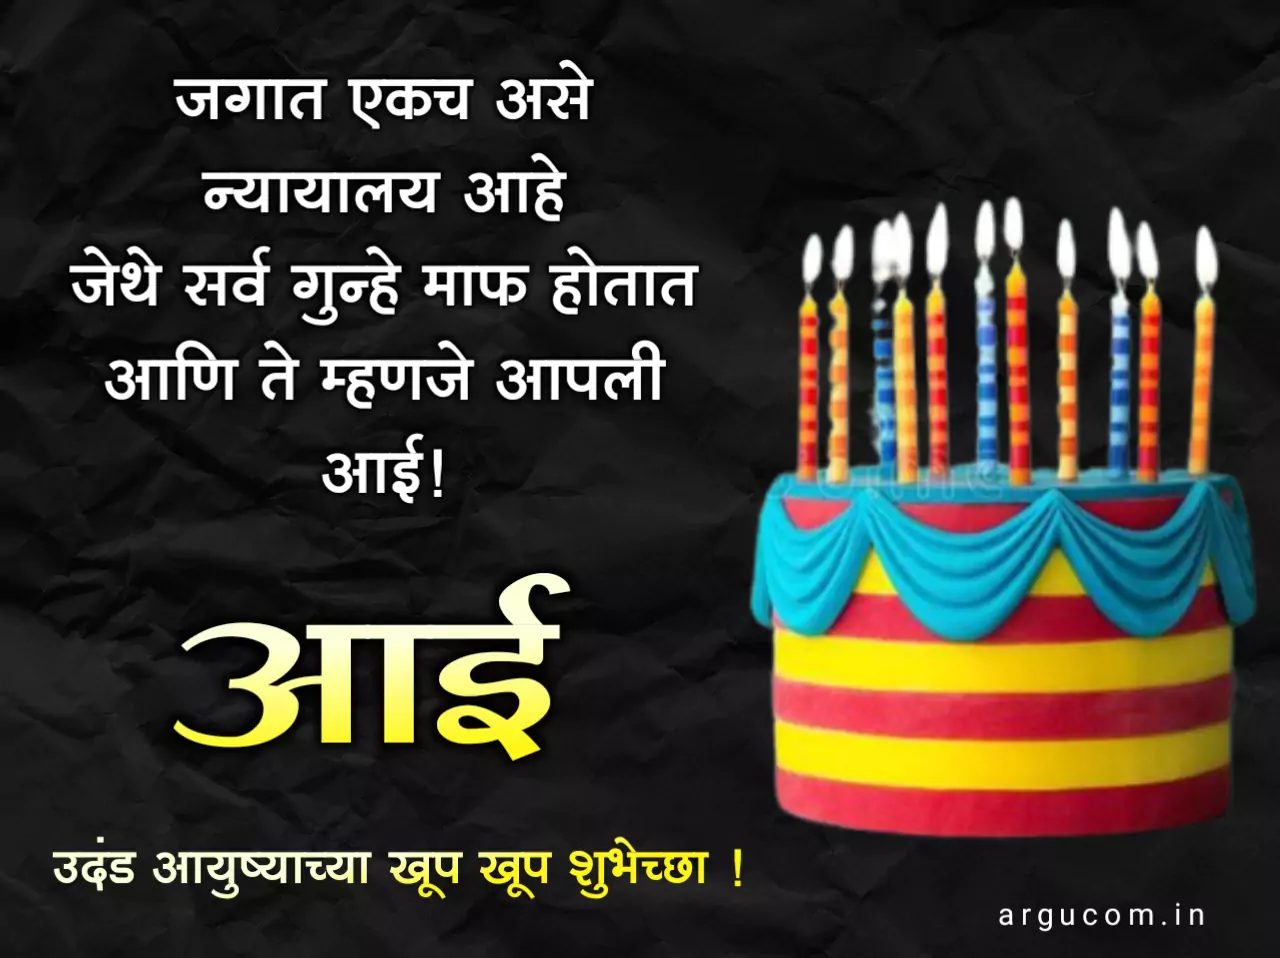 Happy Birthday status for mother in marathi